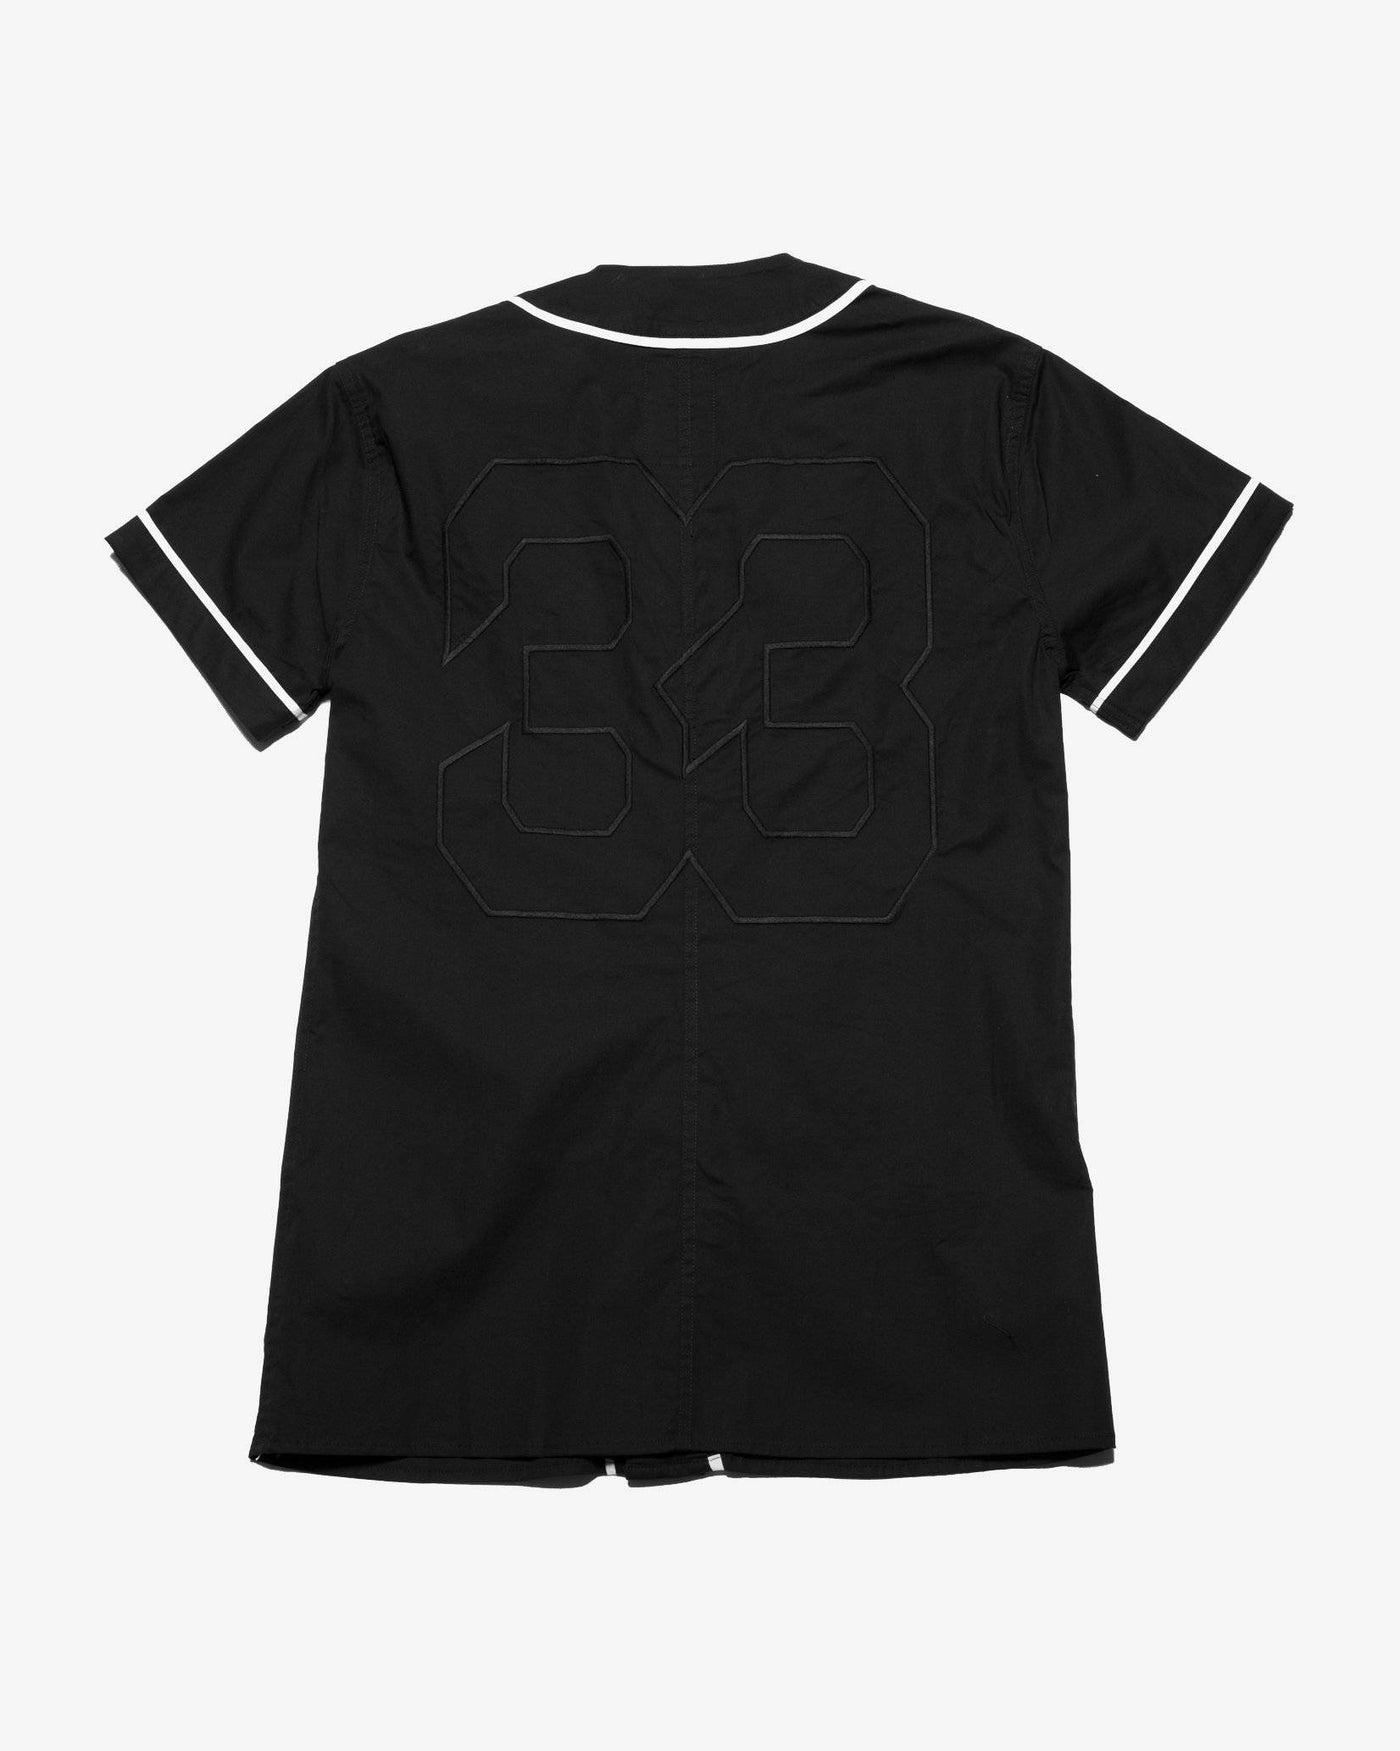 Konus Men's Woven Baseball Jersey Shirt in Black by Shop at Konus